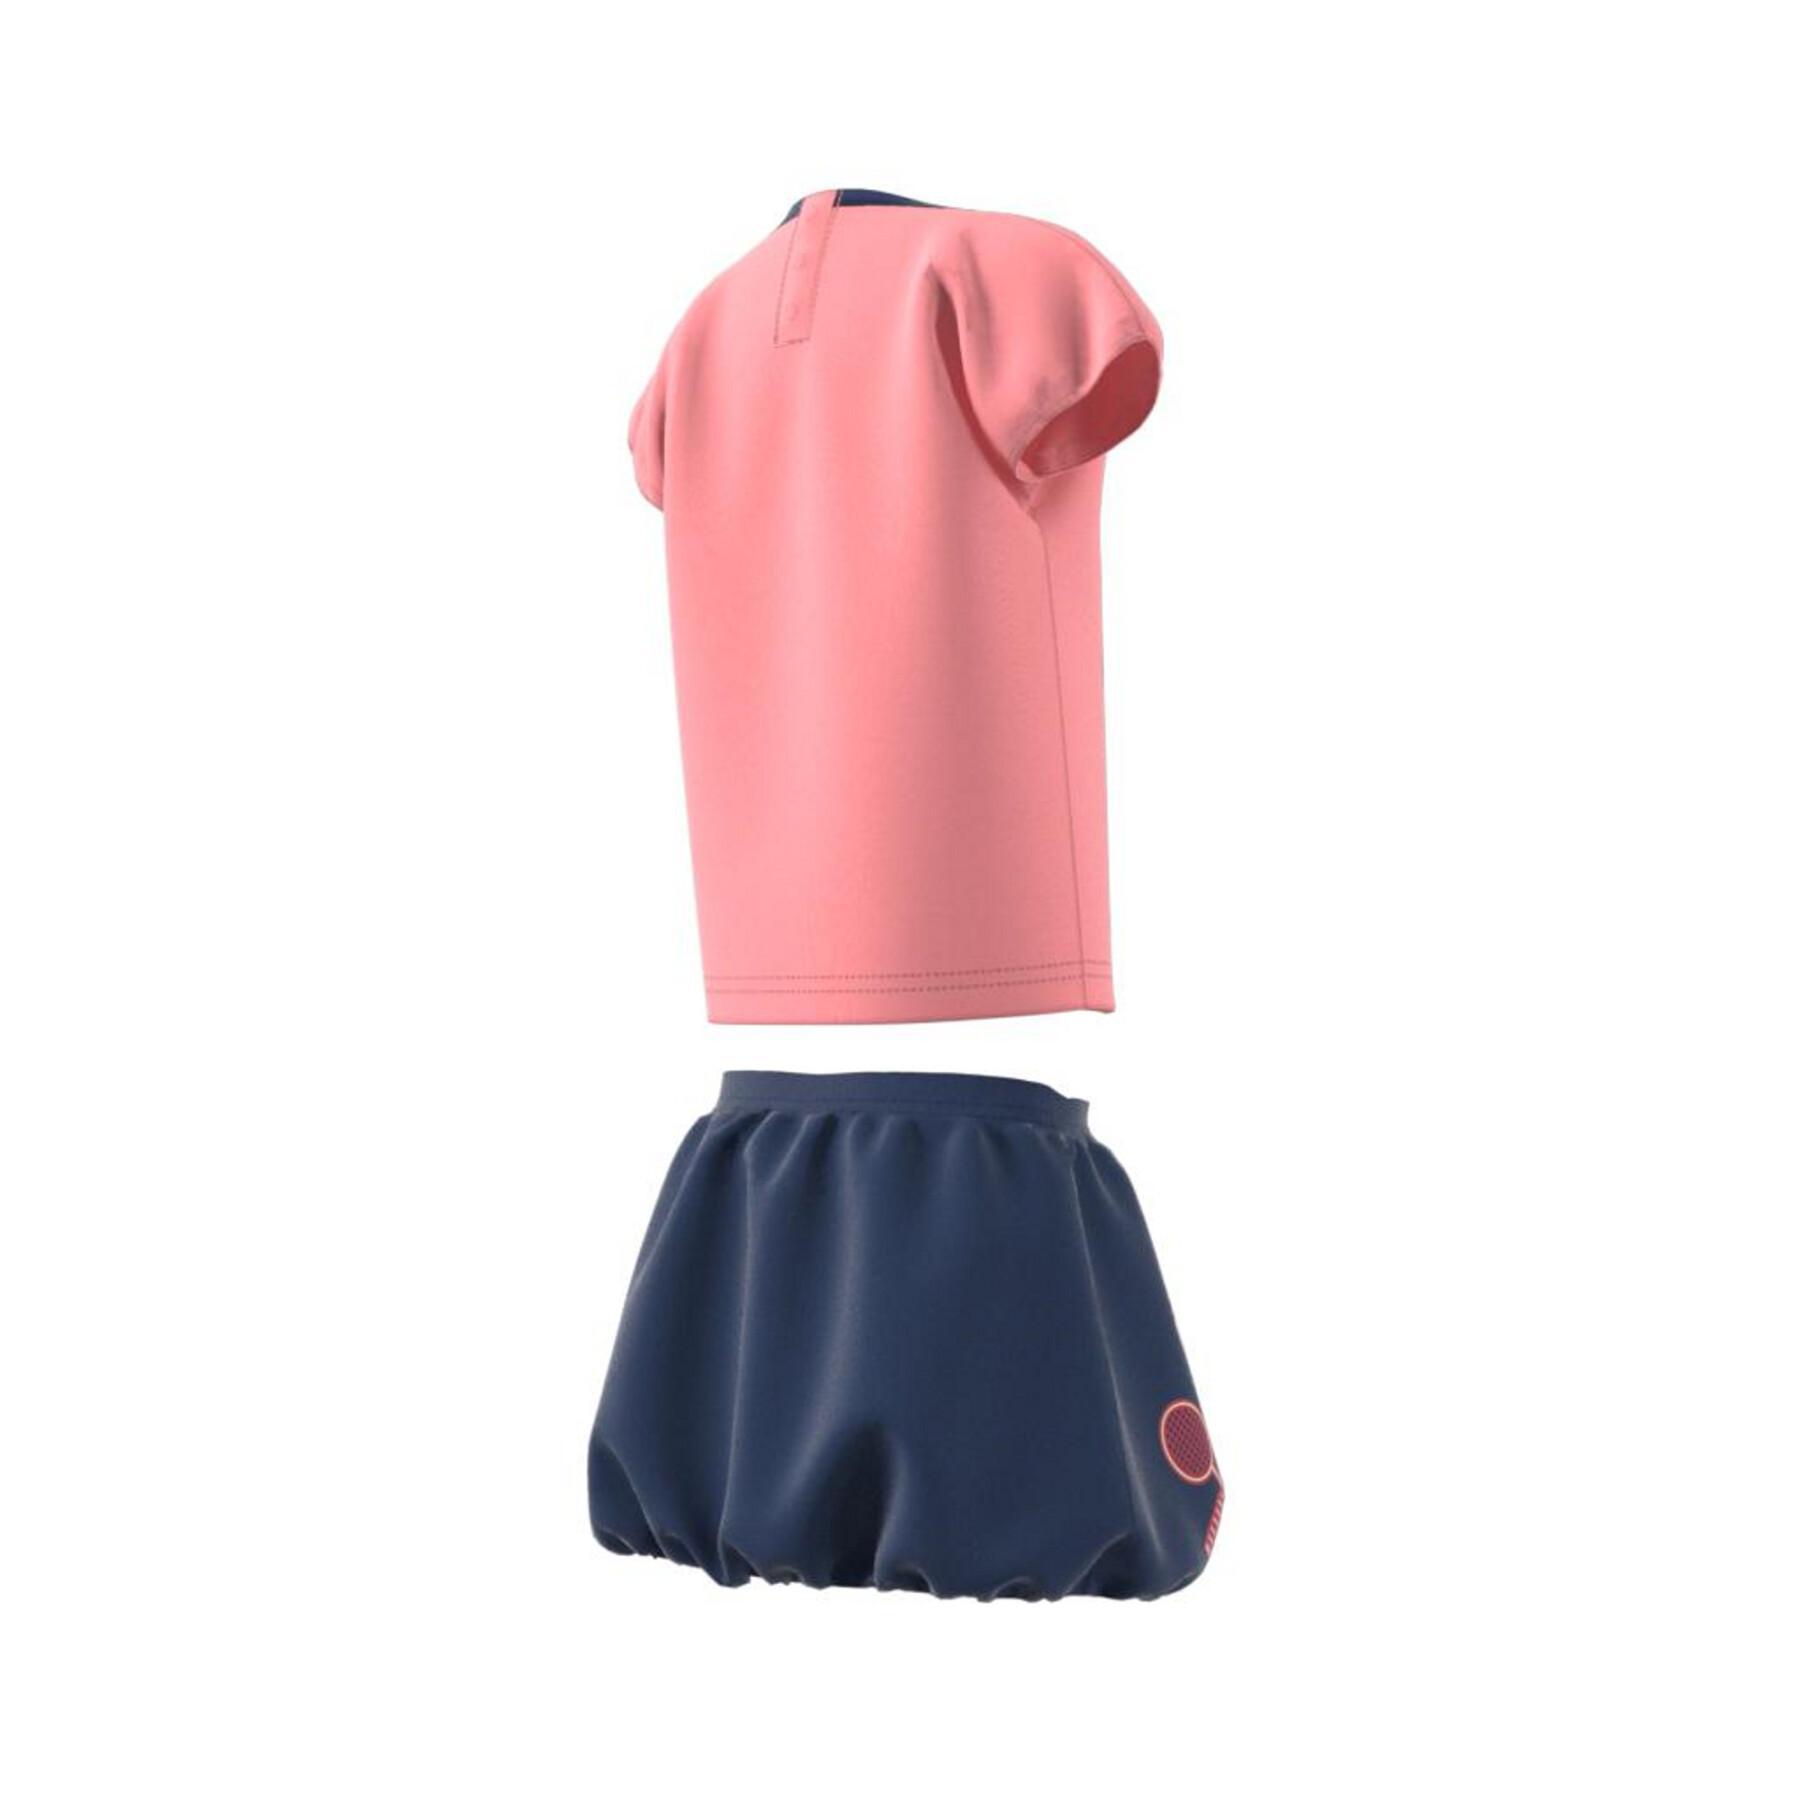 Baby-kit girl adidas Character Set